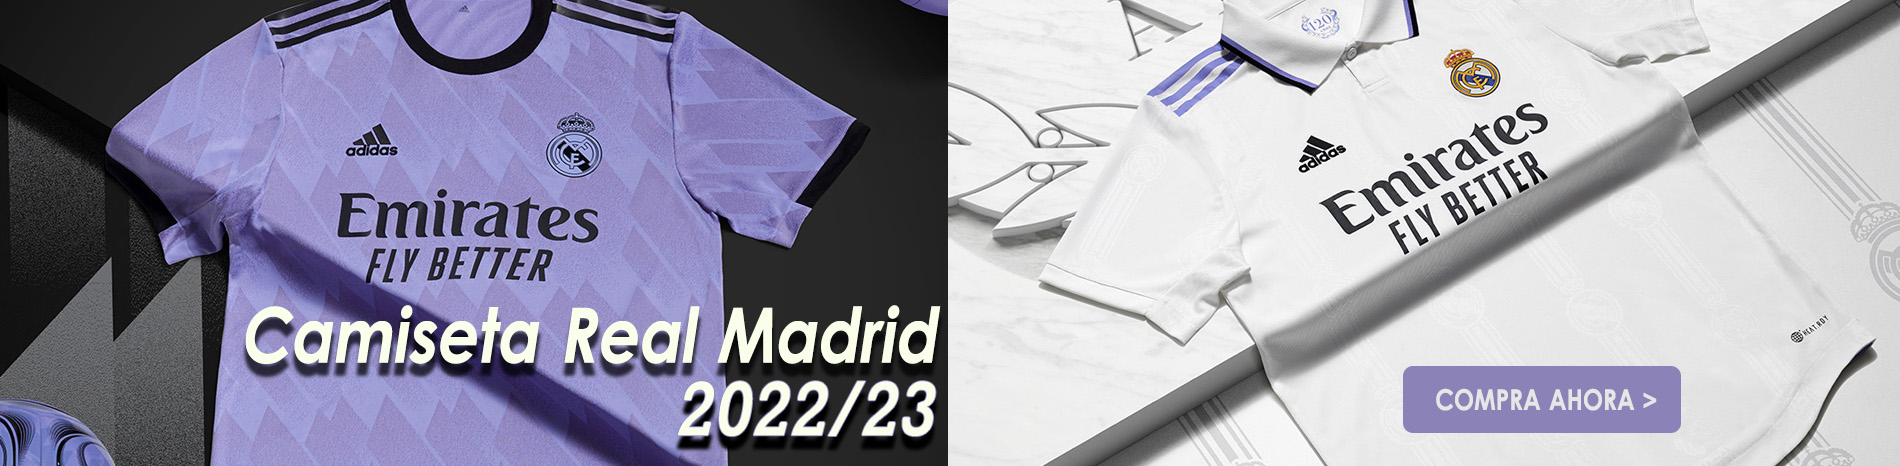 camiseta del real madrid 2022 2023